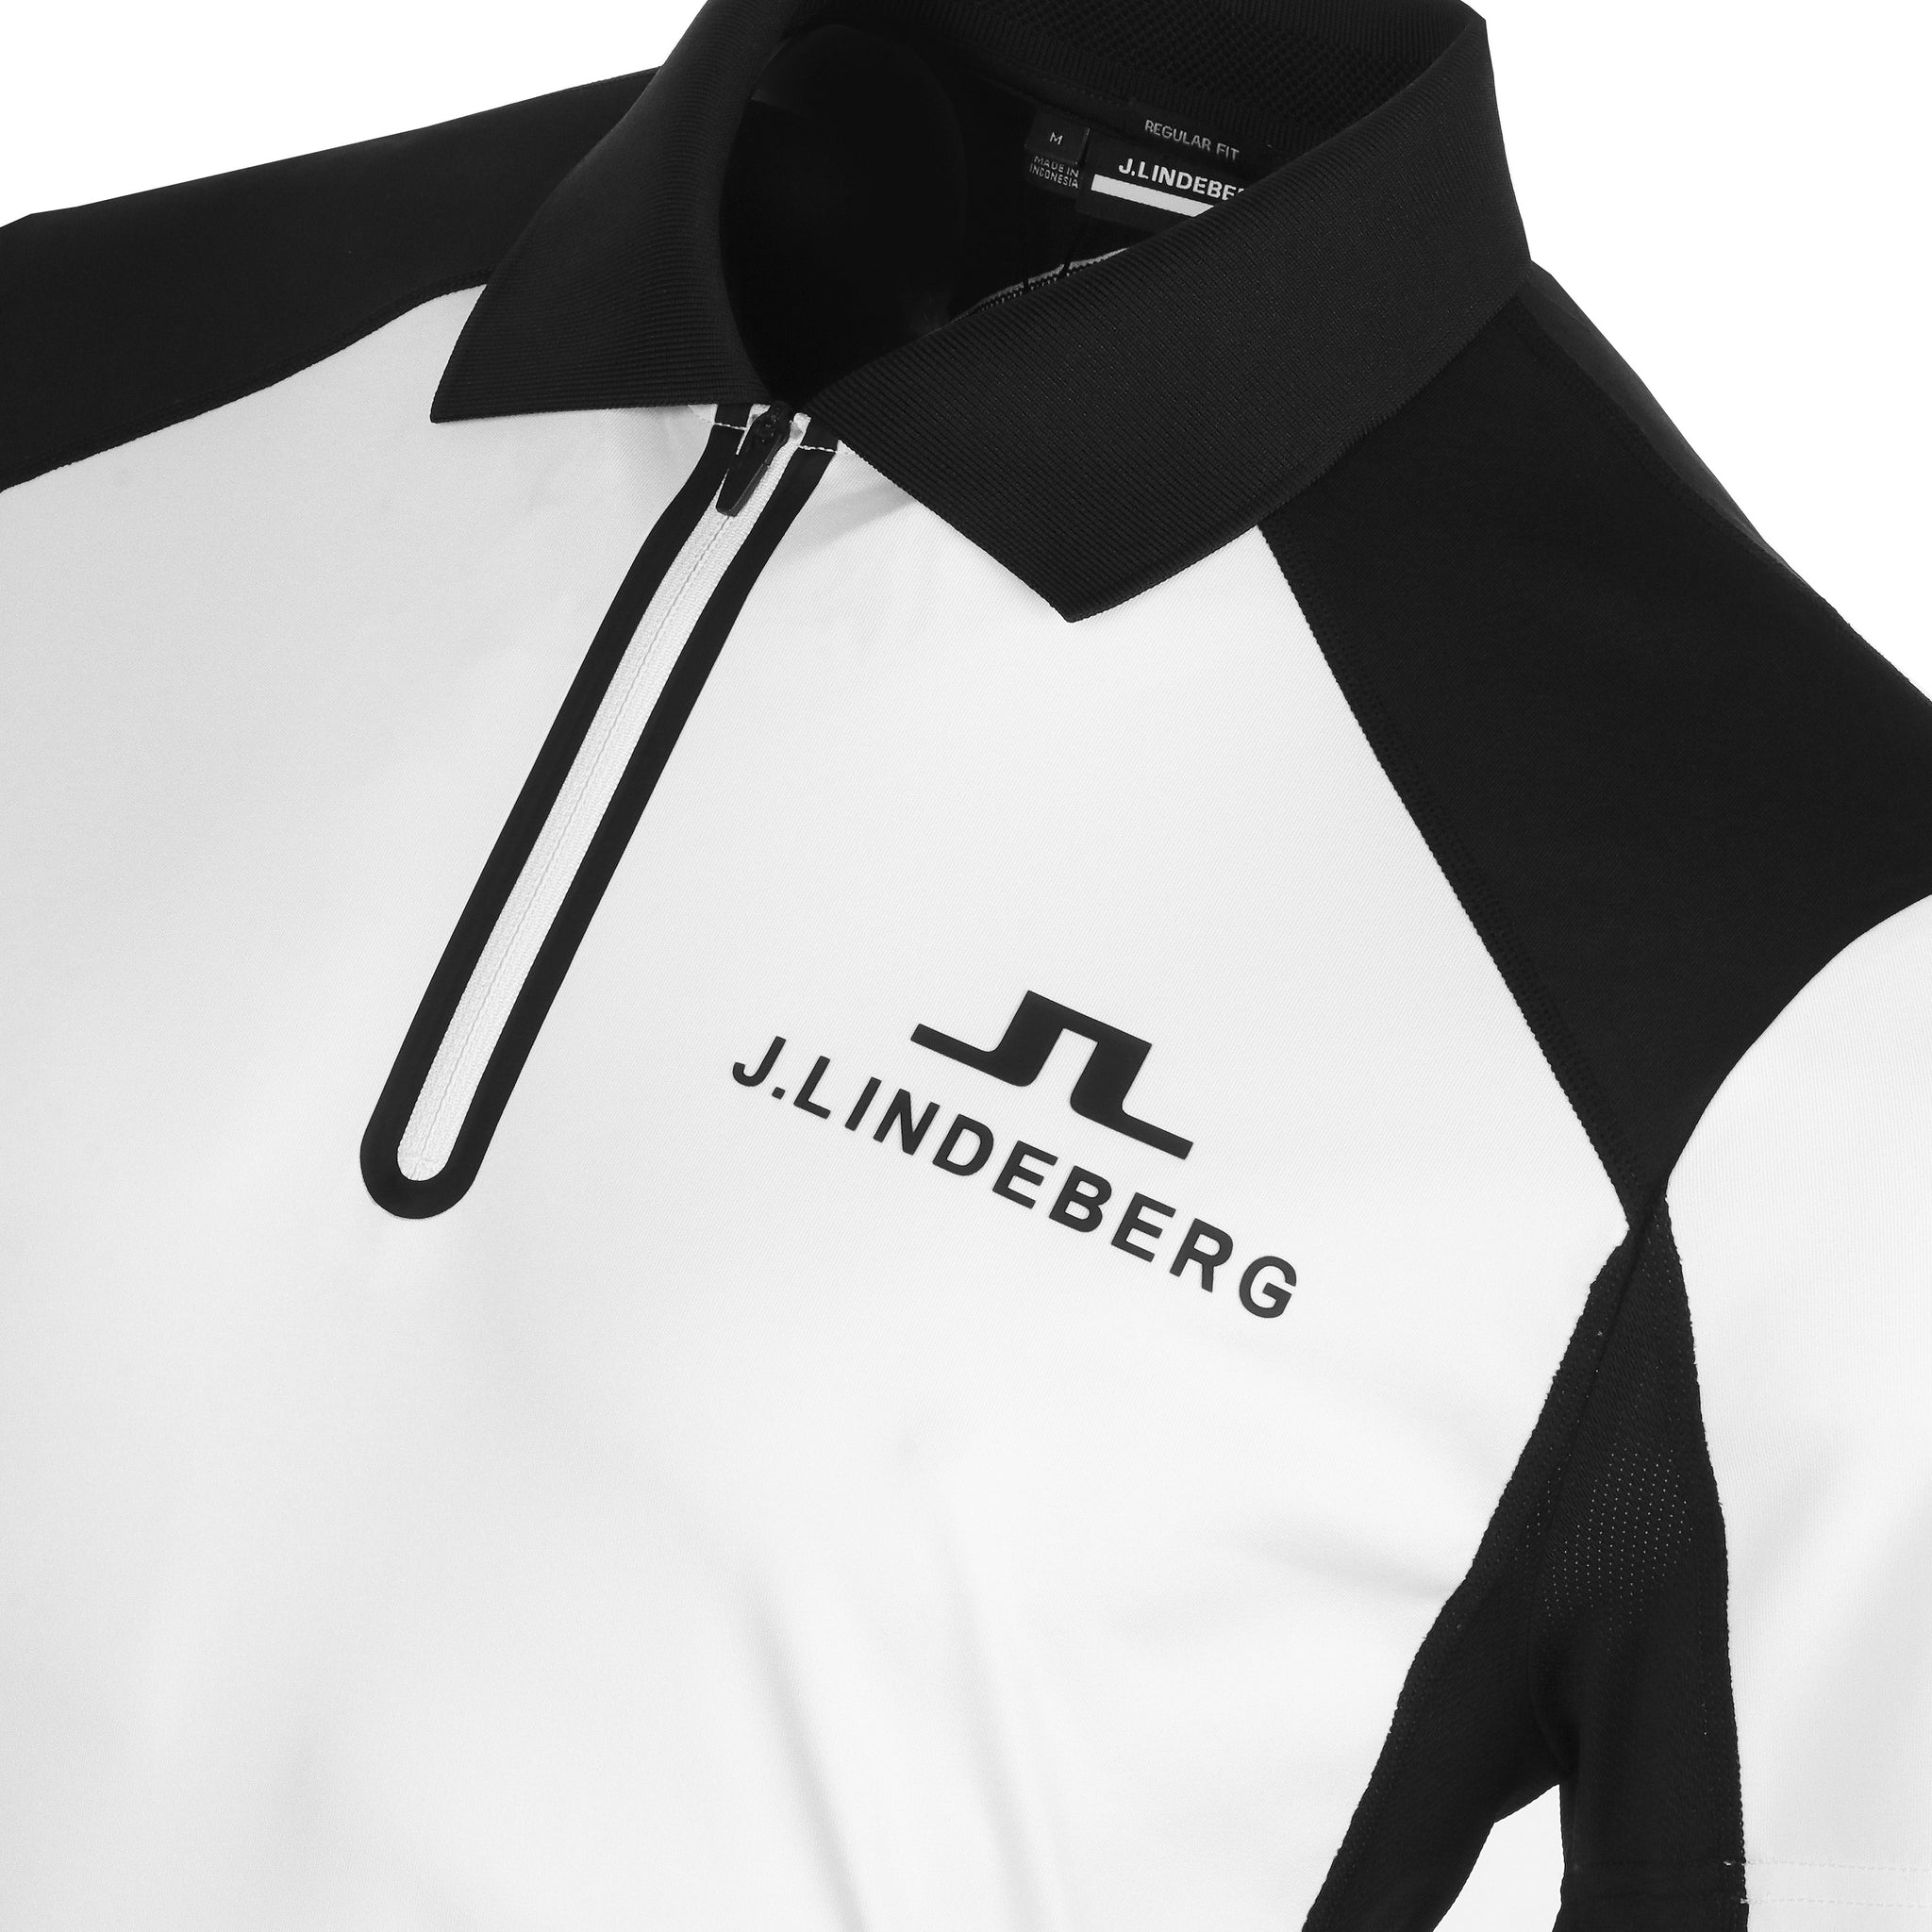 J.Lindeberg Golf Arch Tour Polo Shirt SS24